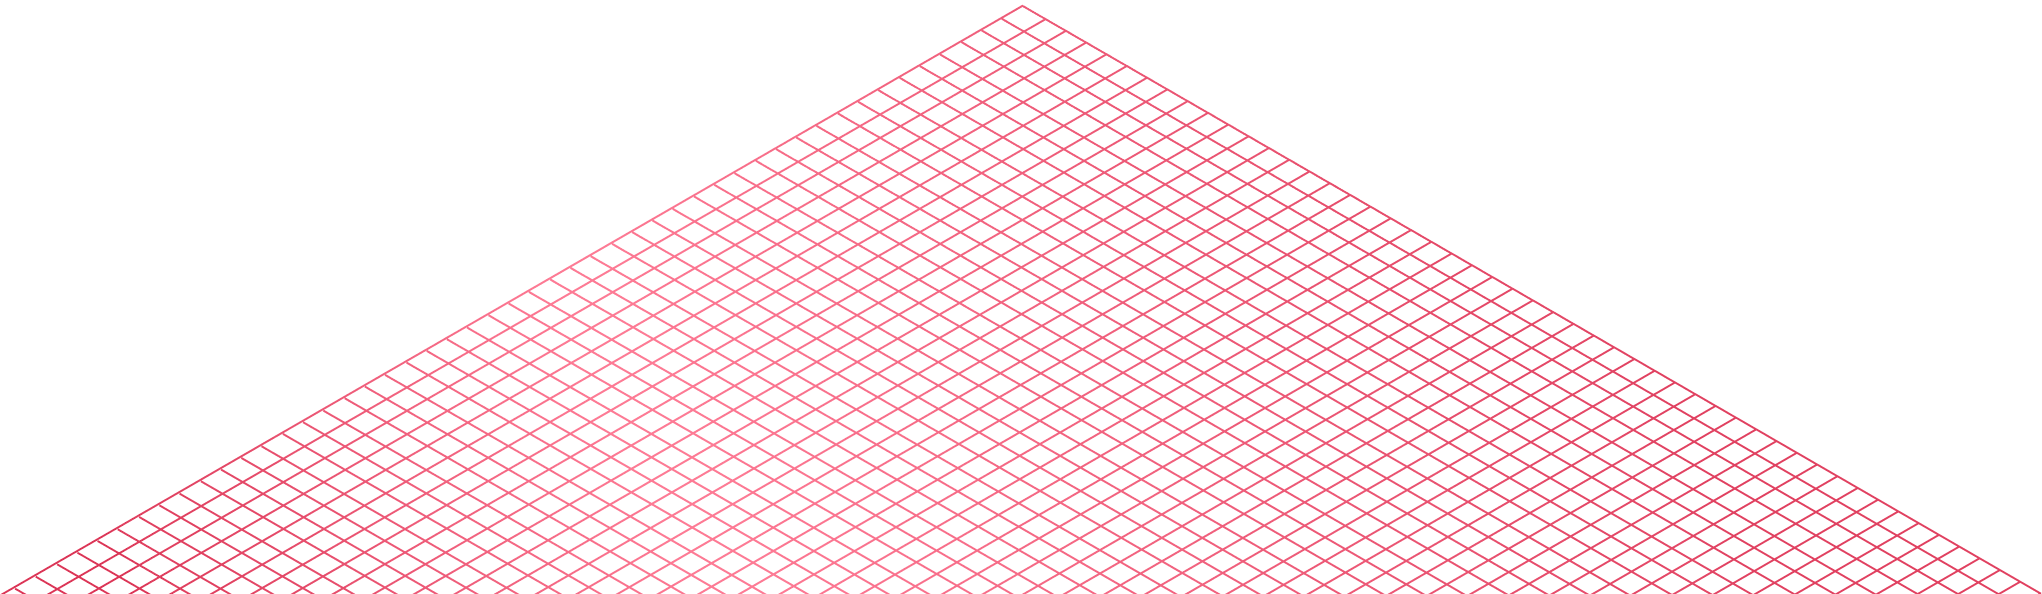 isometric-grid